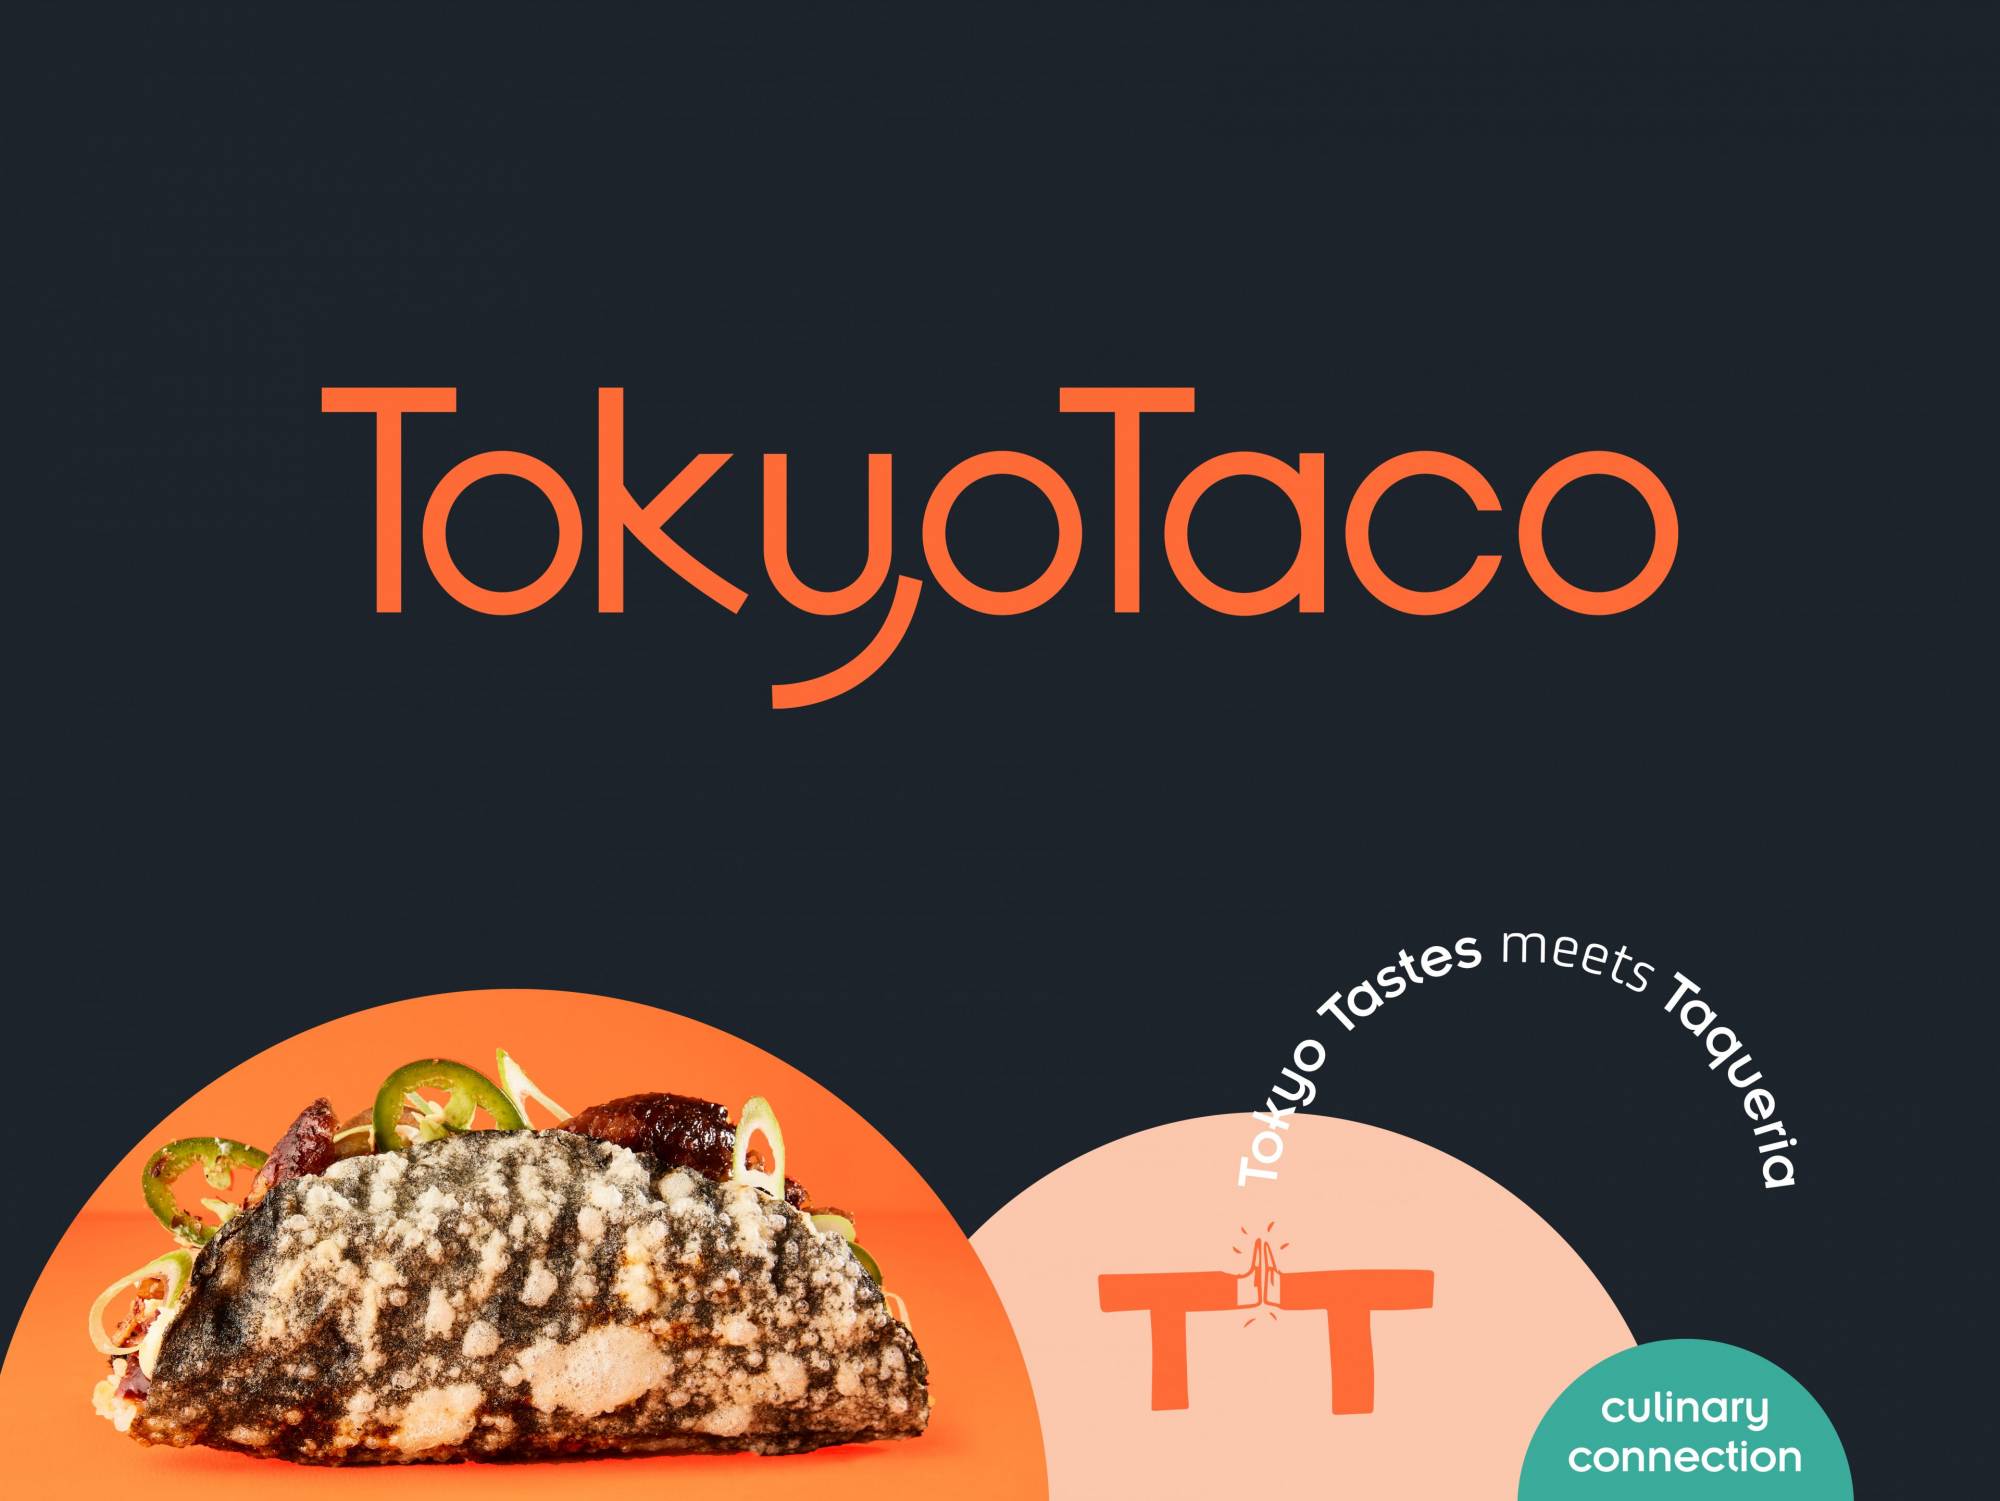 brand agency DAIS developed brand identity for hospitality brand TokyoTaco